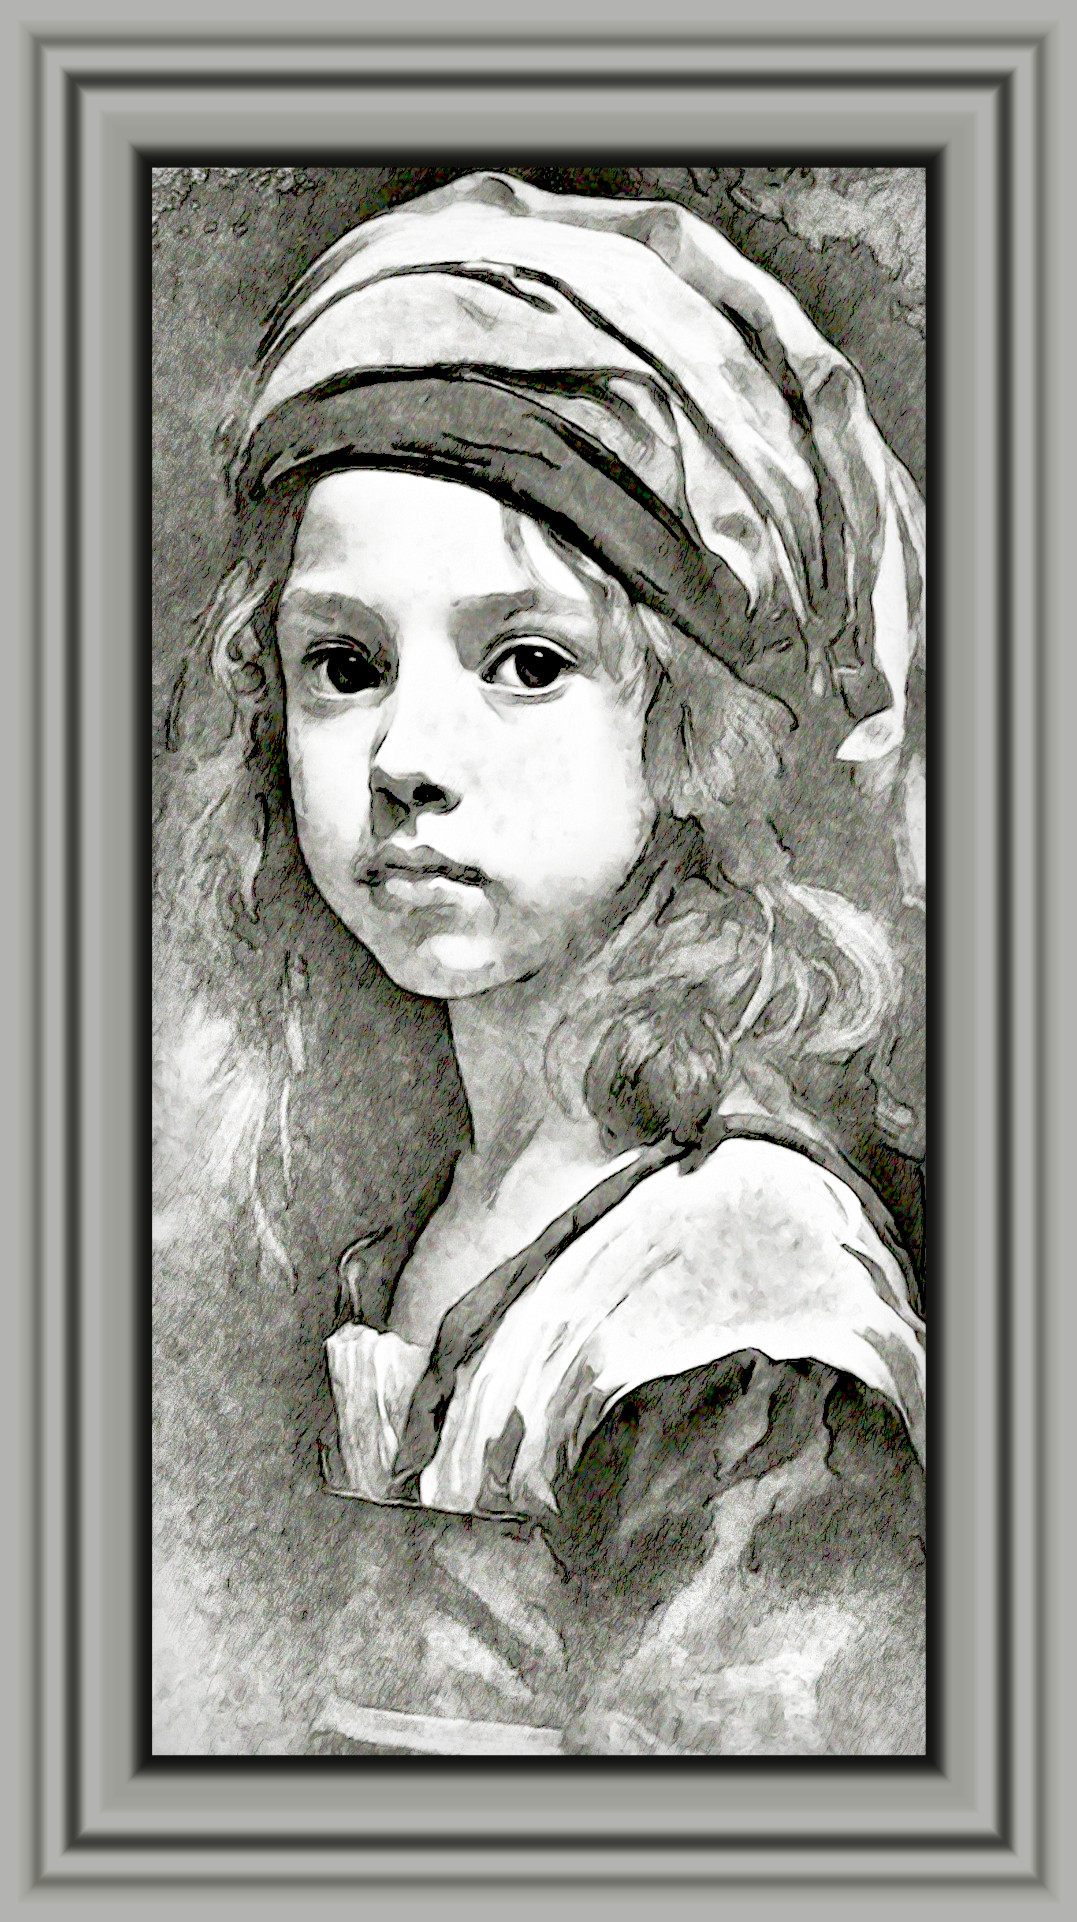 2024-03-29 14-48-14 5c0907dbbd3f97f3673f6724c5a28bd4 with Lines Art effect, preset=3000,35.0,3.5,Pencil Portrait,1,[207,207,200],3,1.jpg